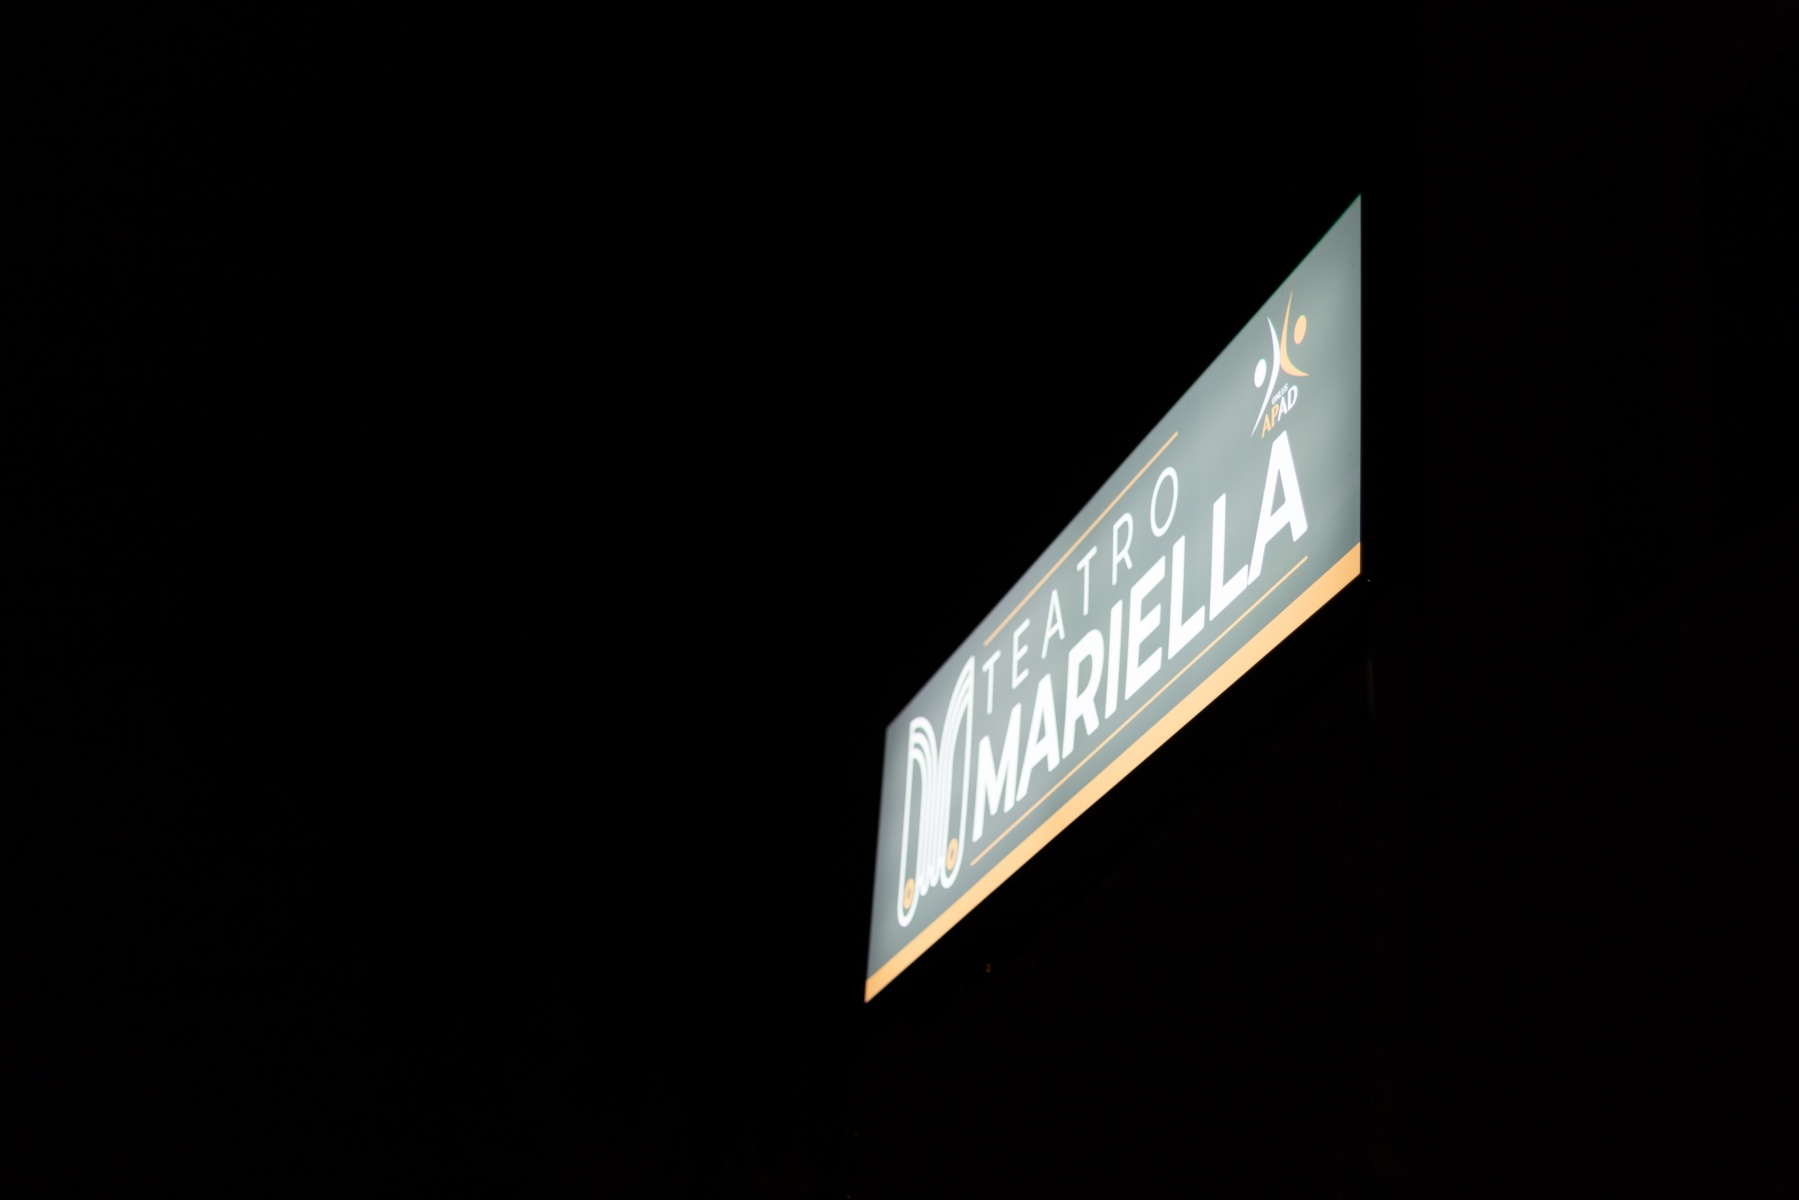 Teatro Mariella